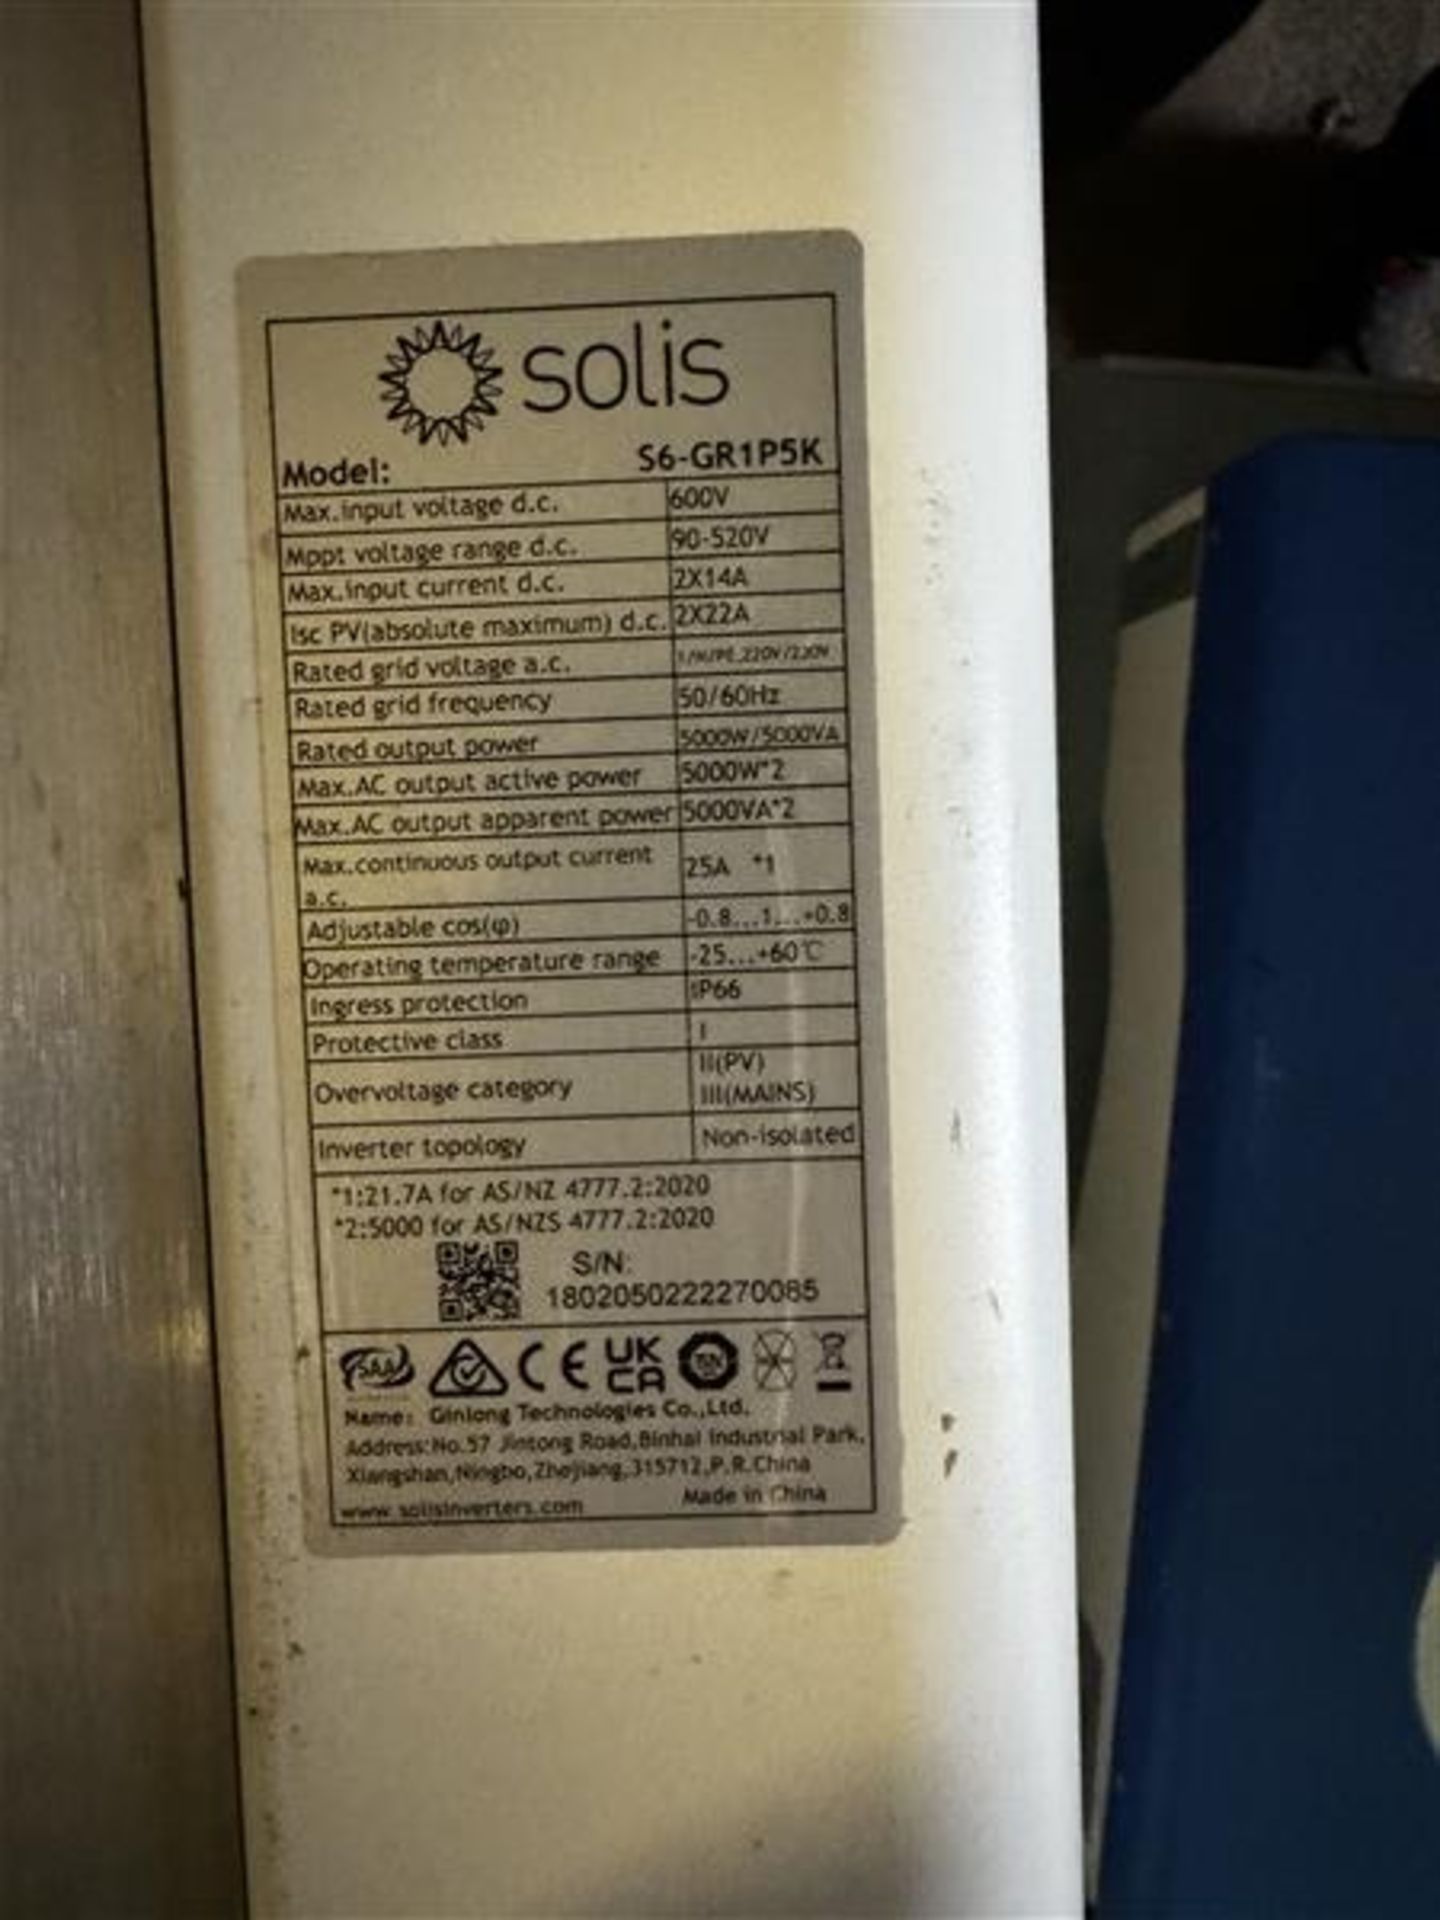 Solis 56 Series inverter, model 56/GR1P5K, serial no. 1802050222270085 - Image 3 of 5